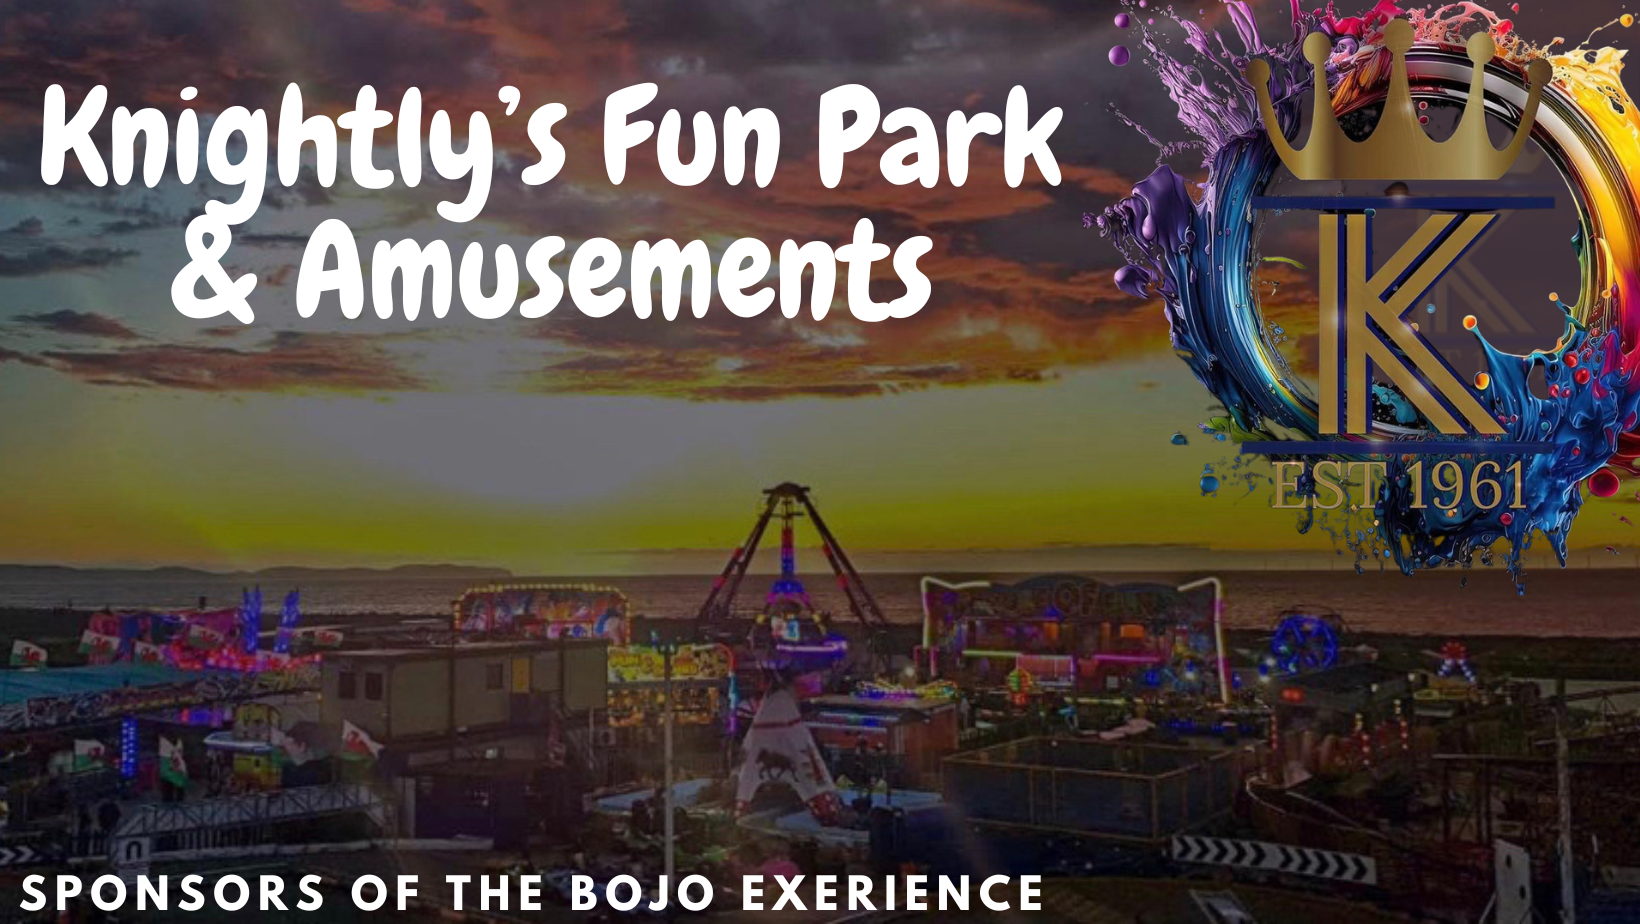 Knightly’s Fun Park & Amusements